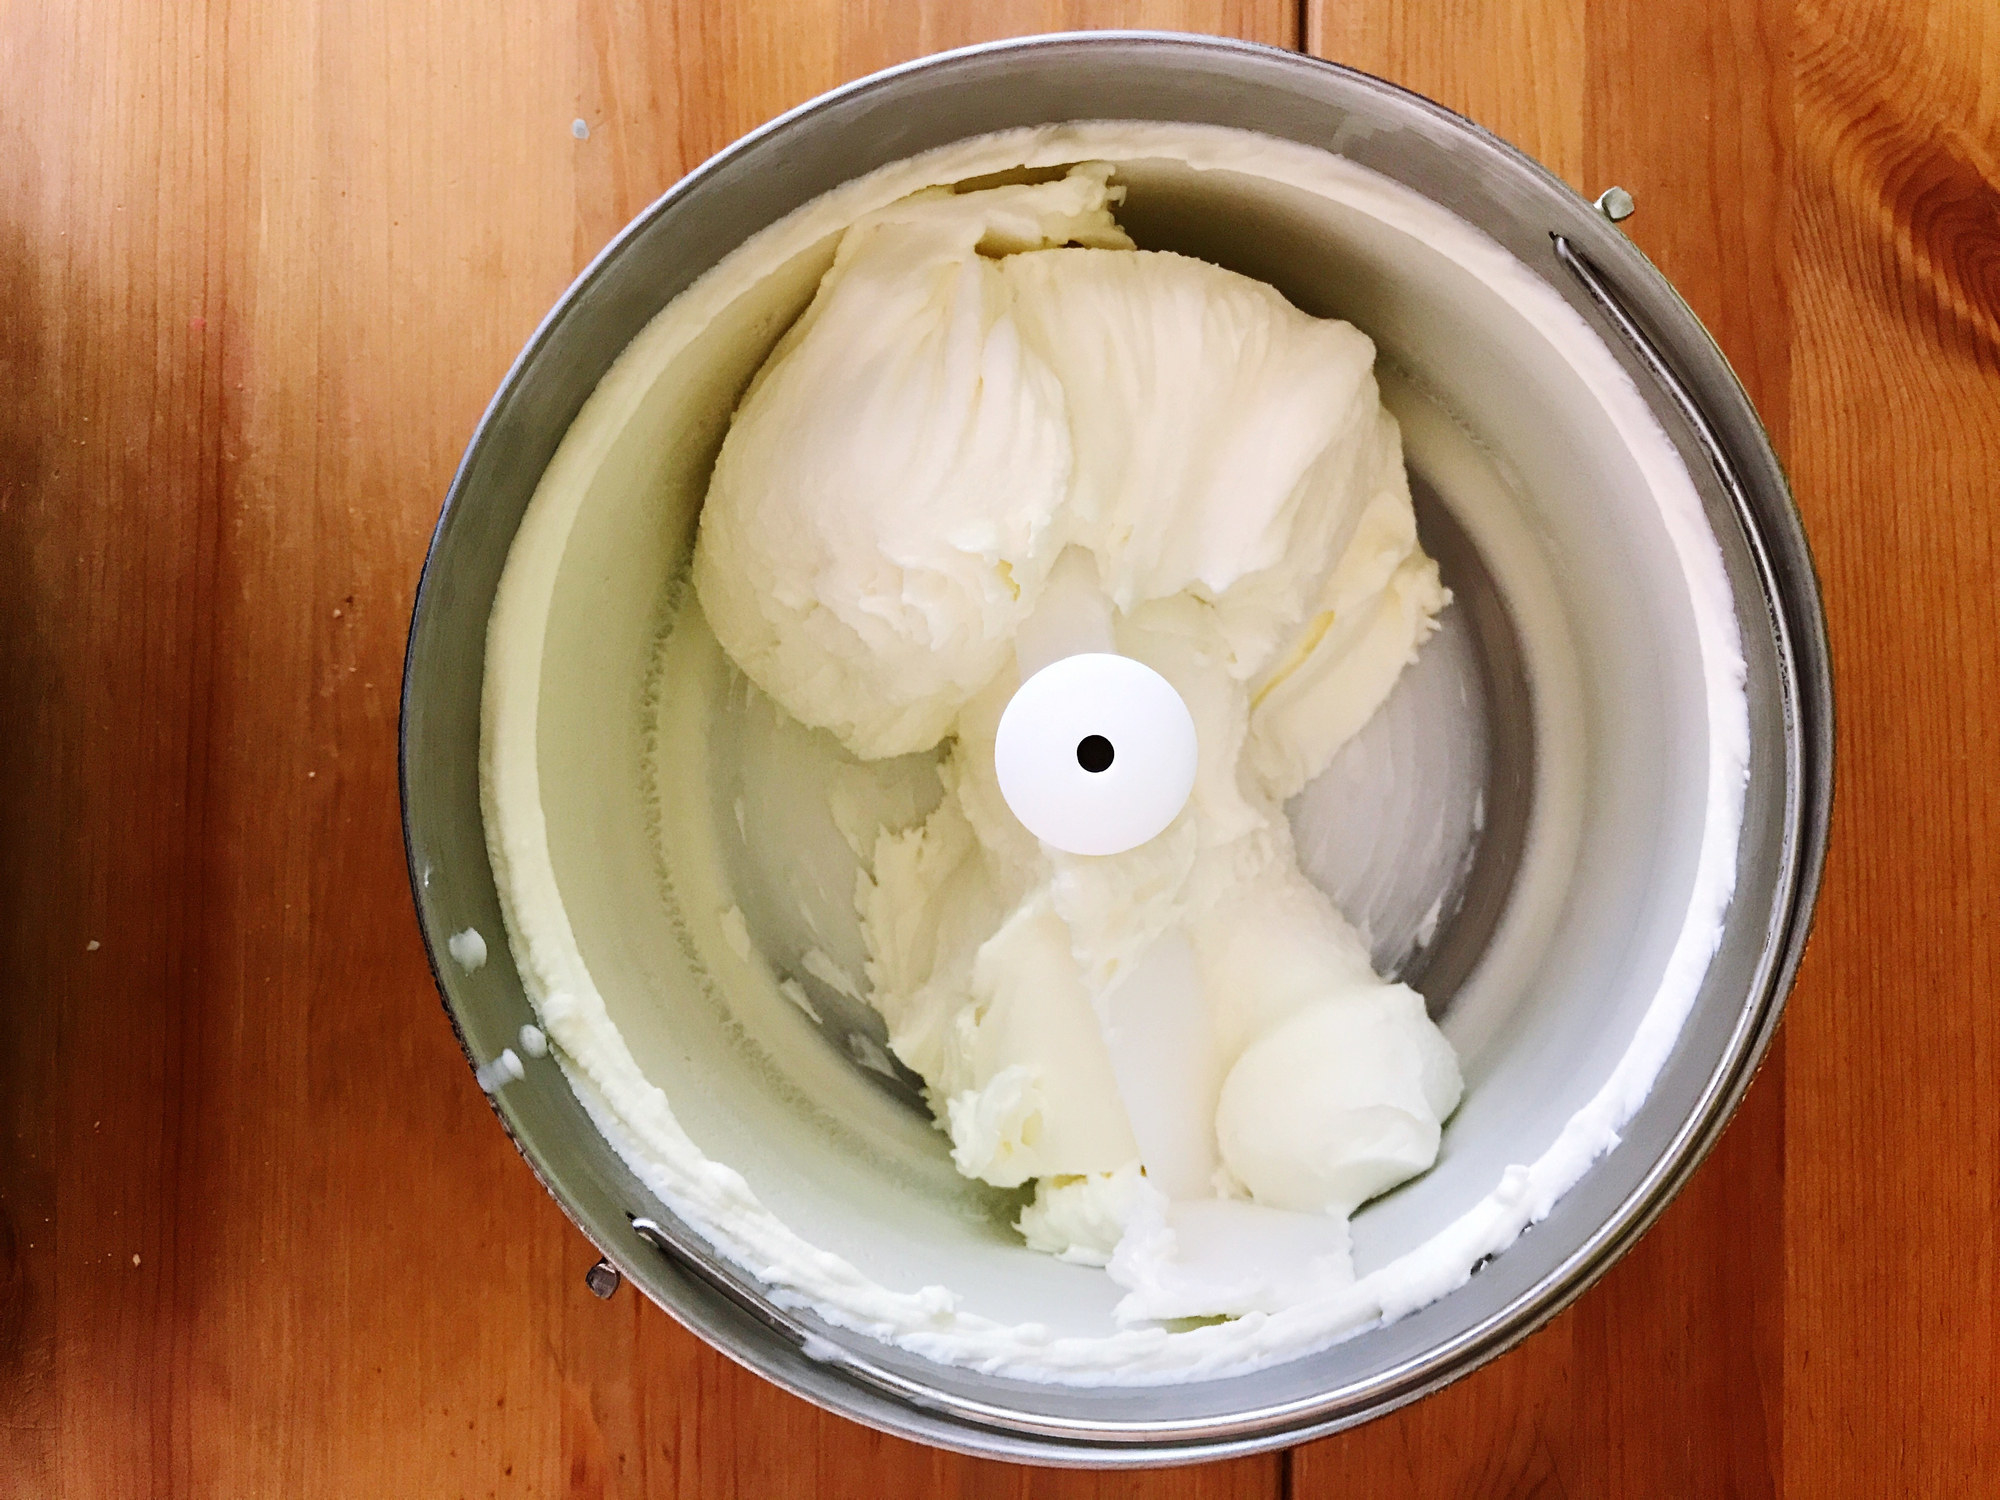 An ice cream maker filled with vanilla ice cream.